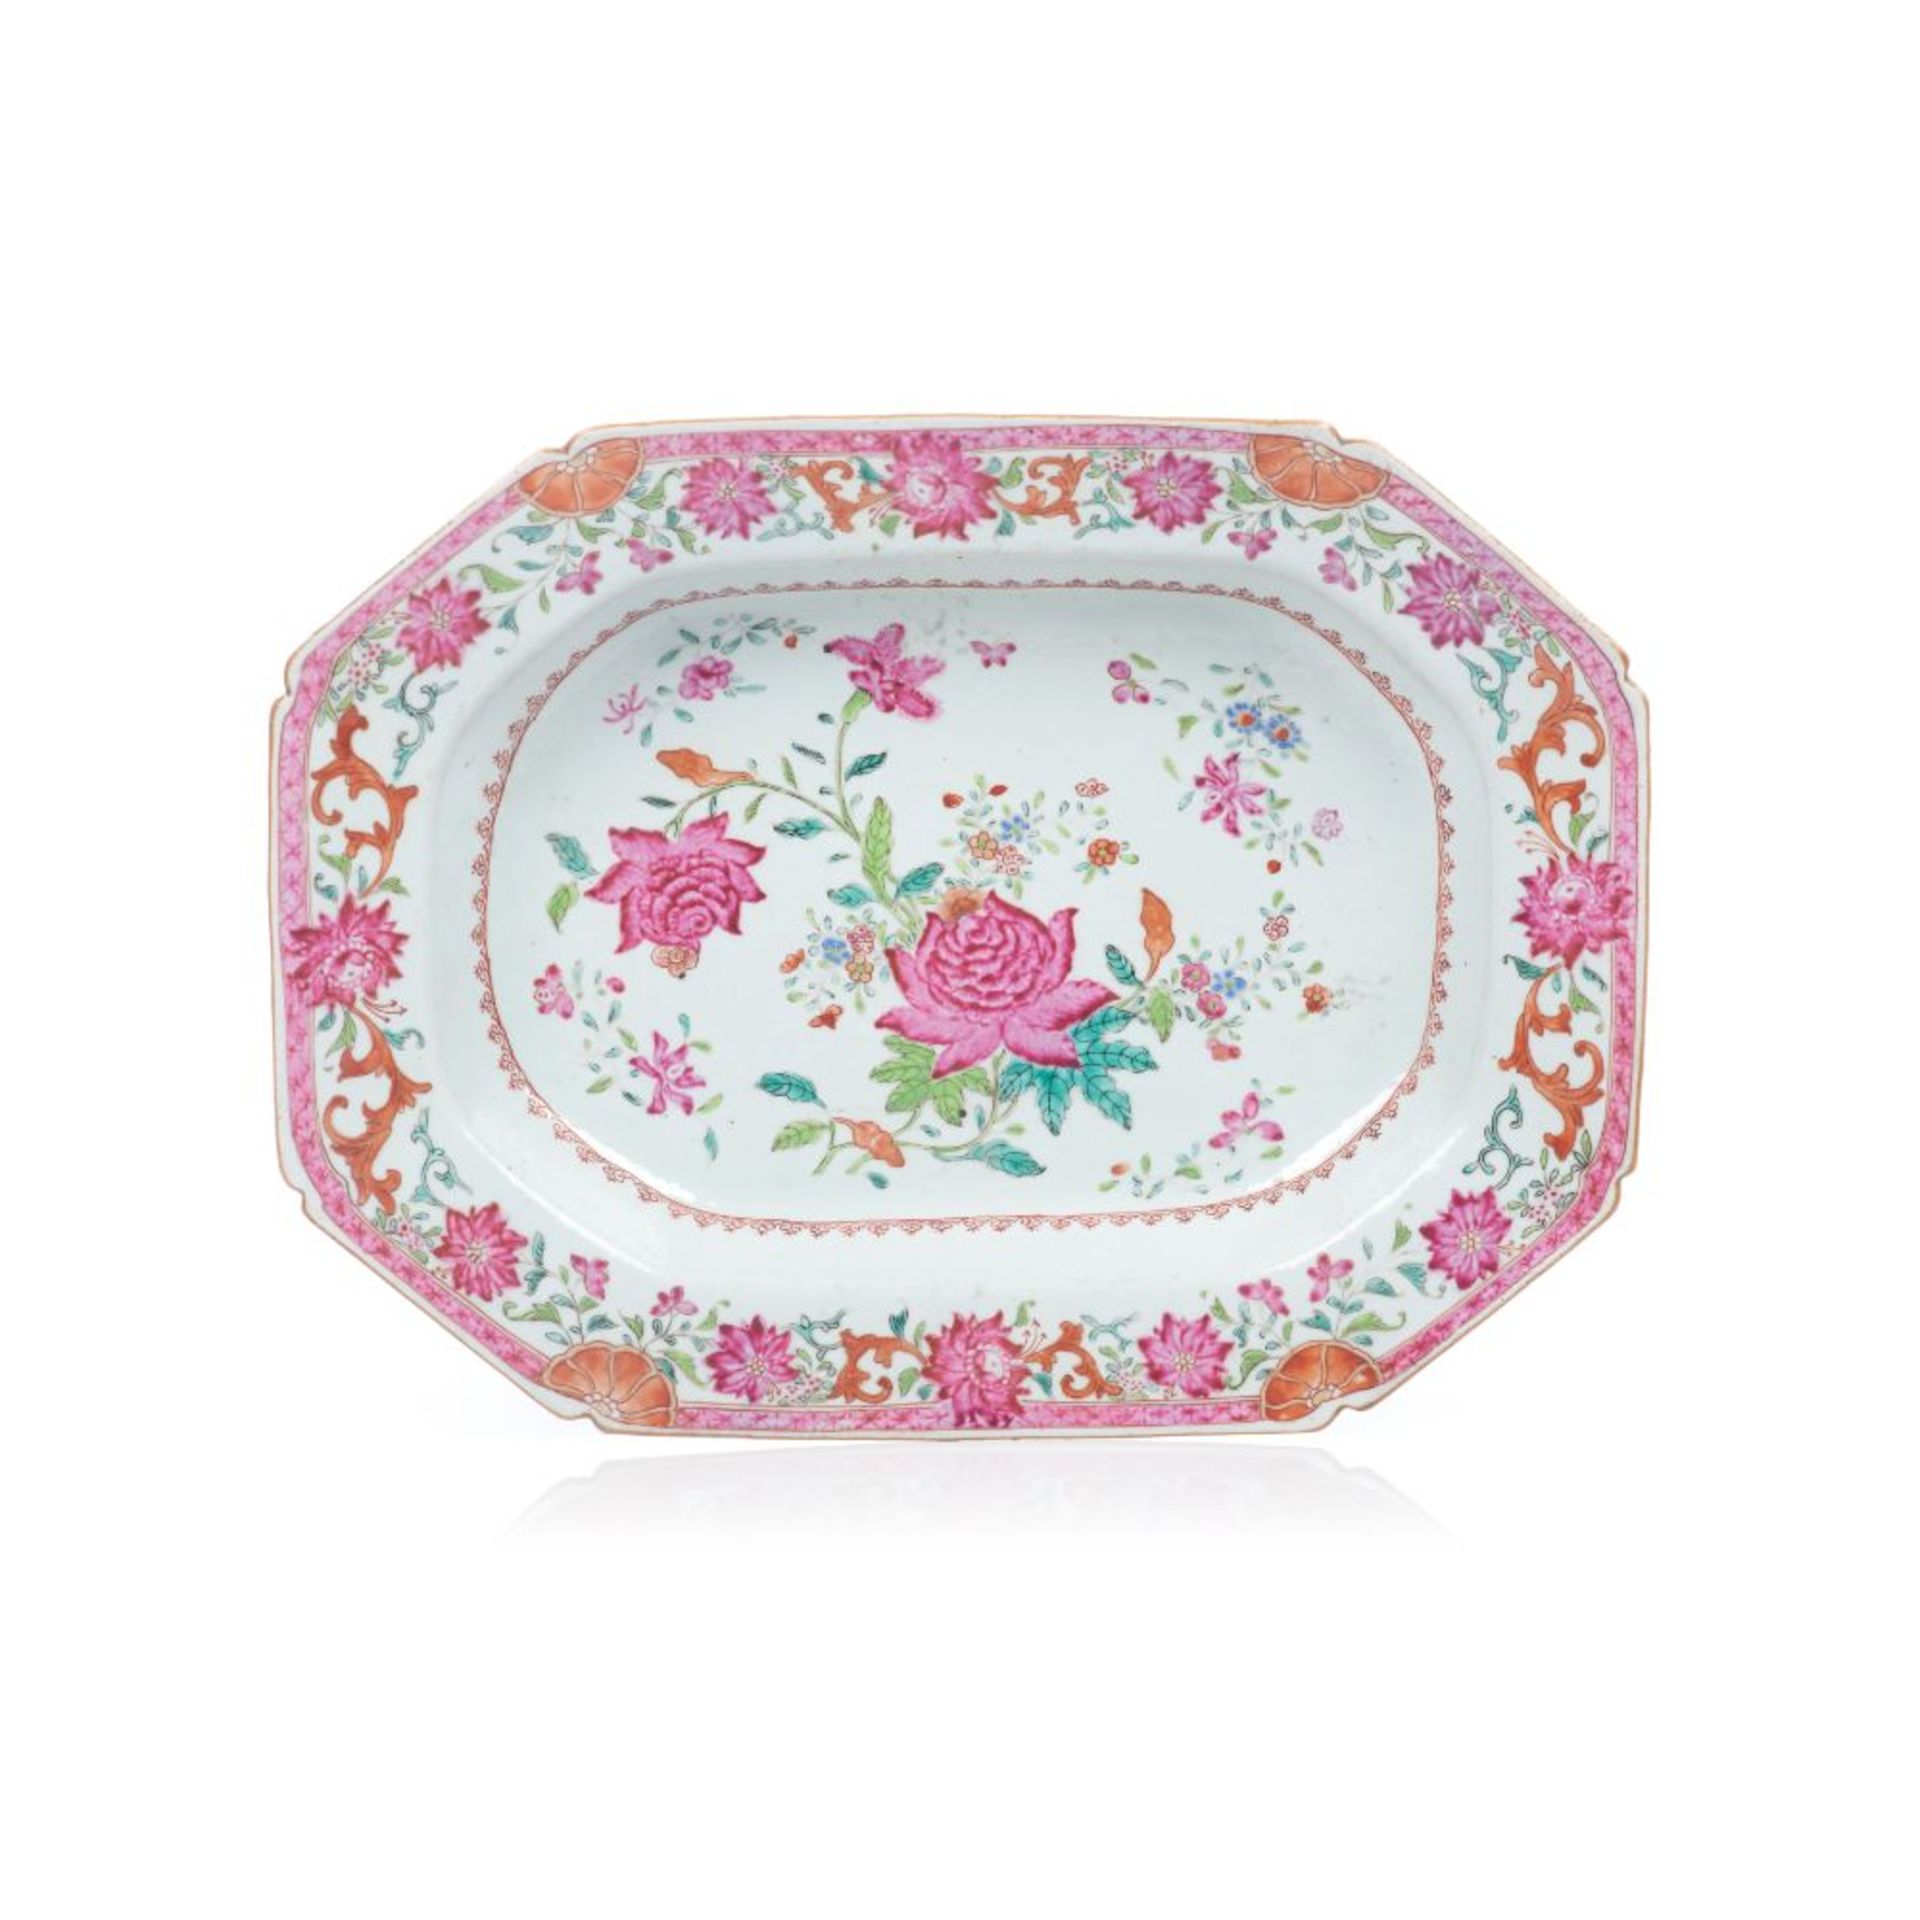 A deep octagonal serving platter, Chinese export porcelain, Polychrome floral "Famille Rose"